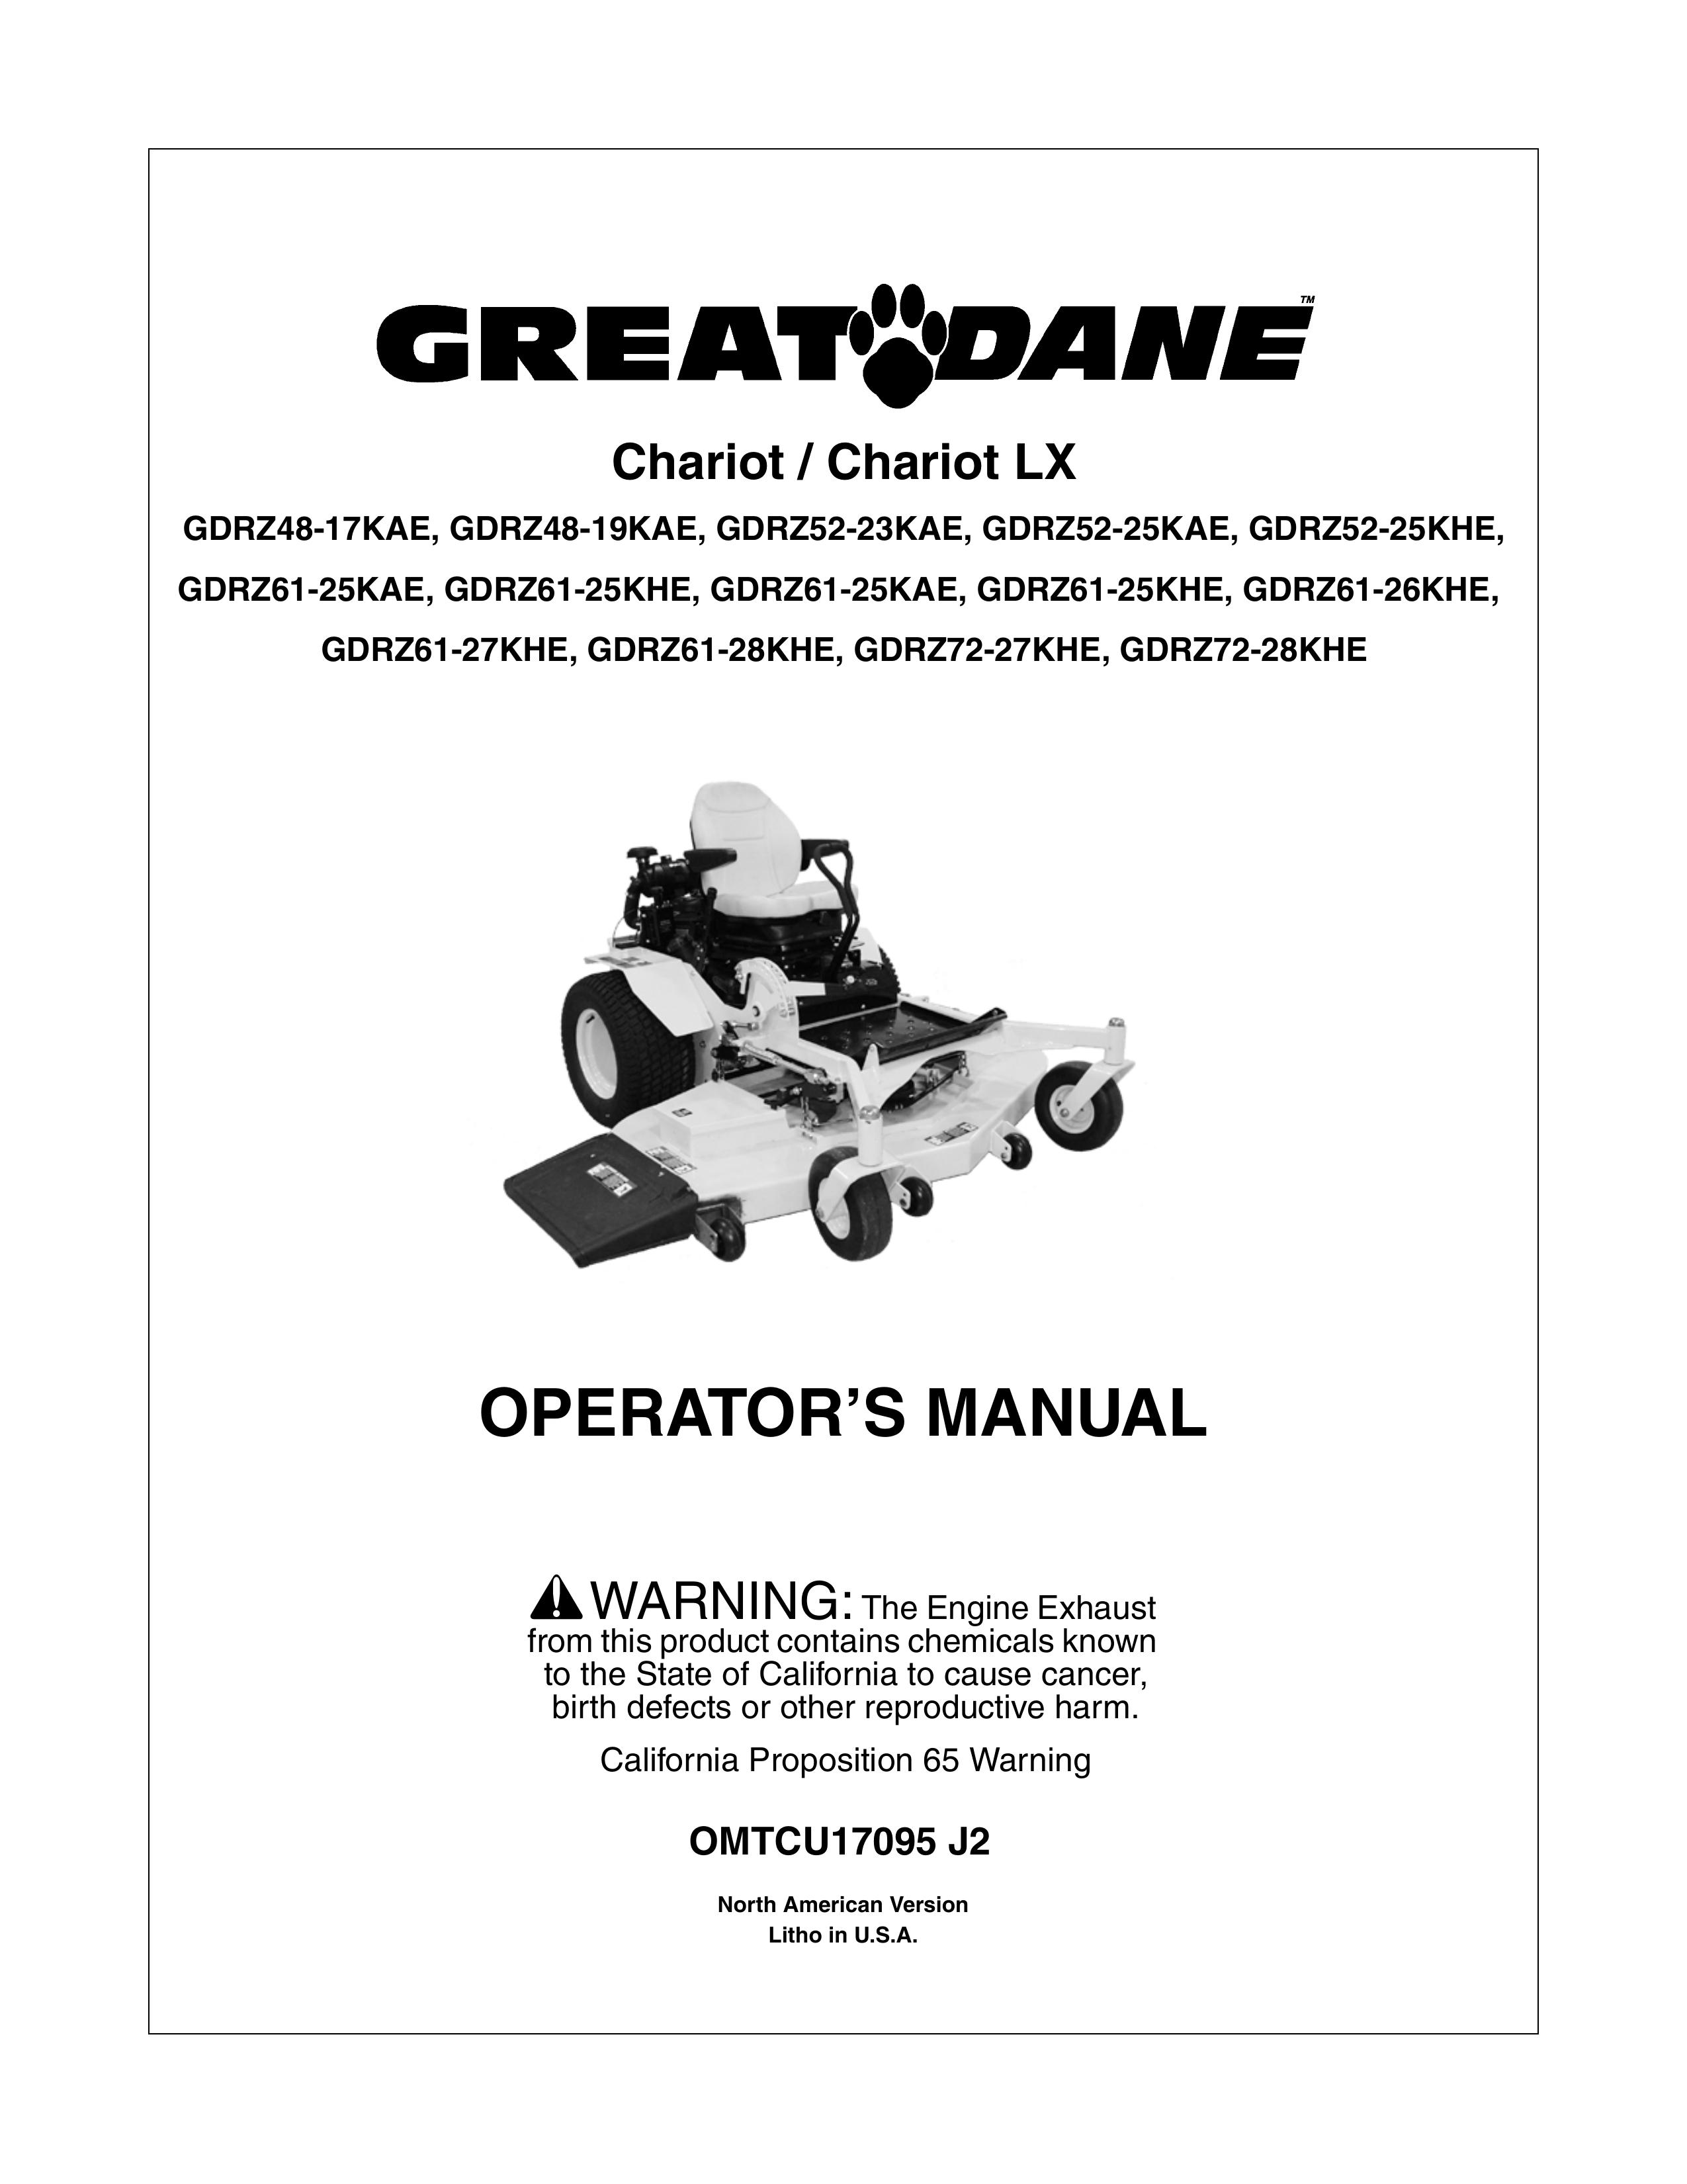 Great Dane GDRZ52-25KHE Lawn Mower User Manual